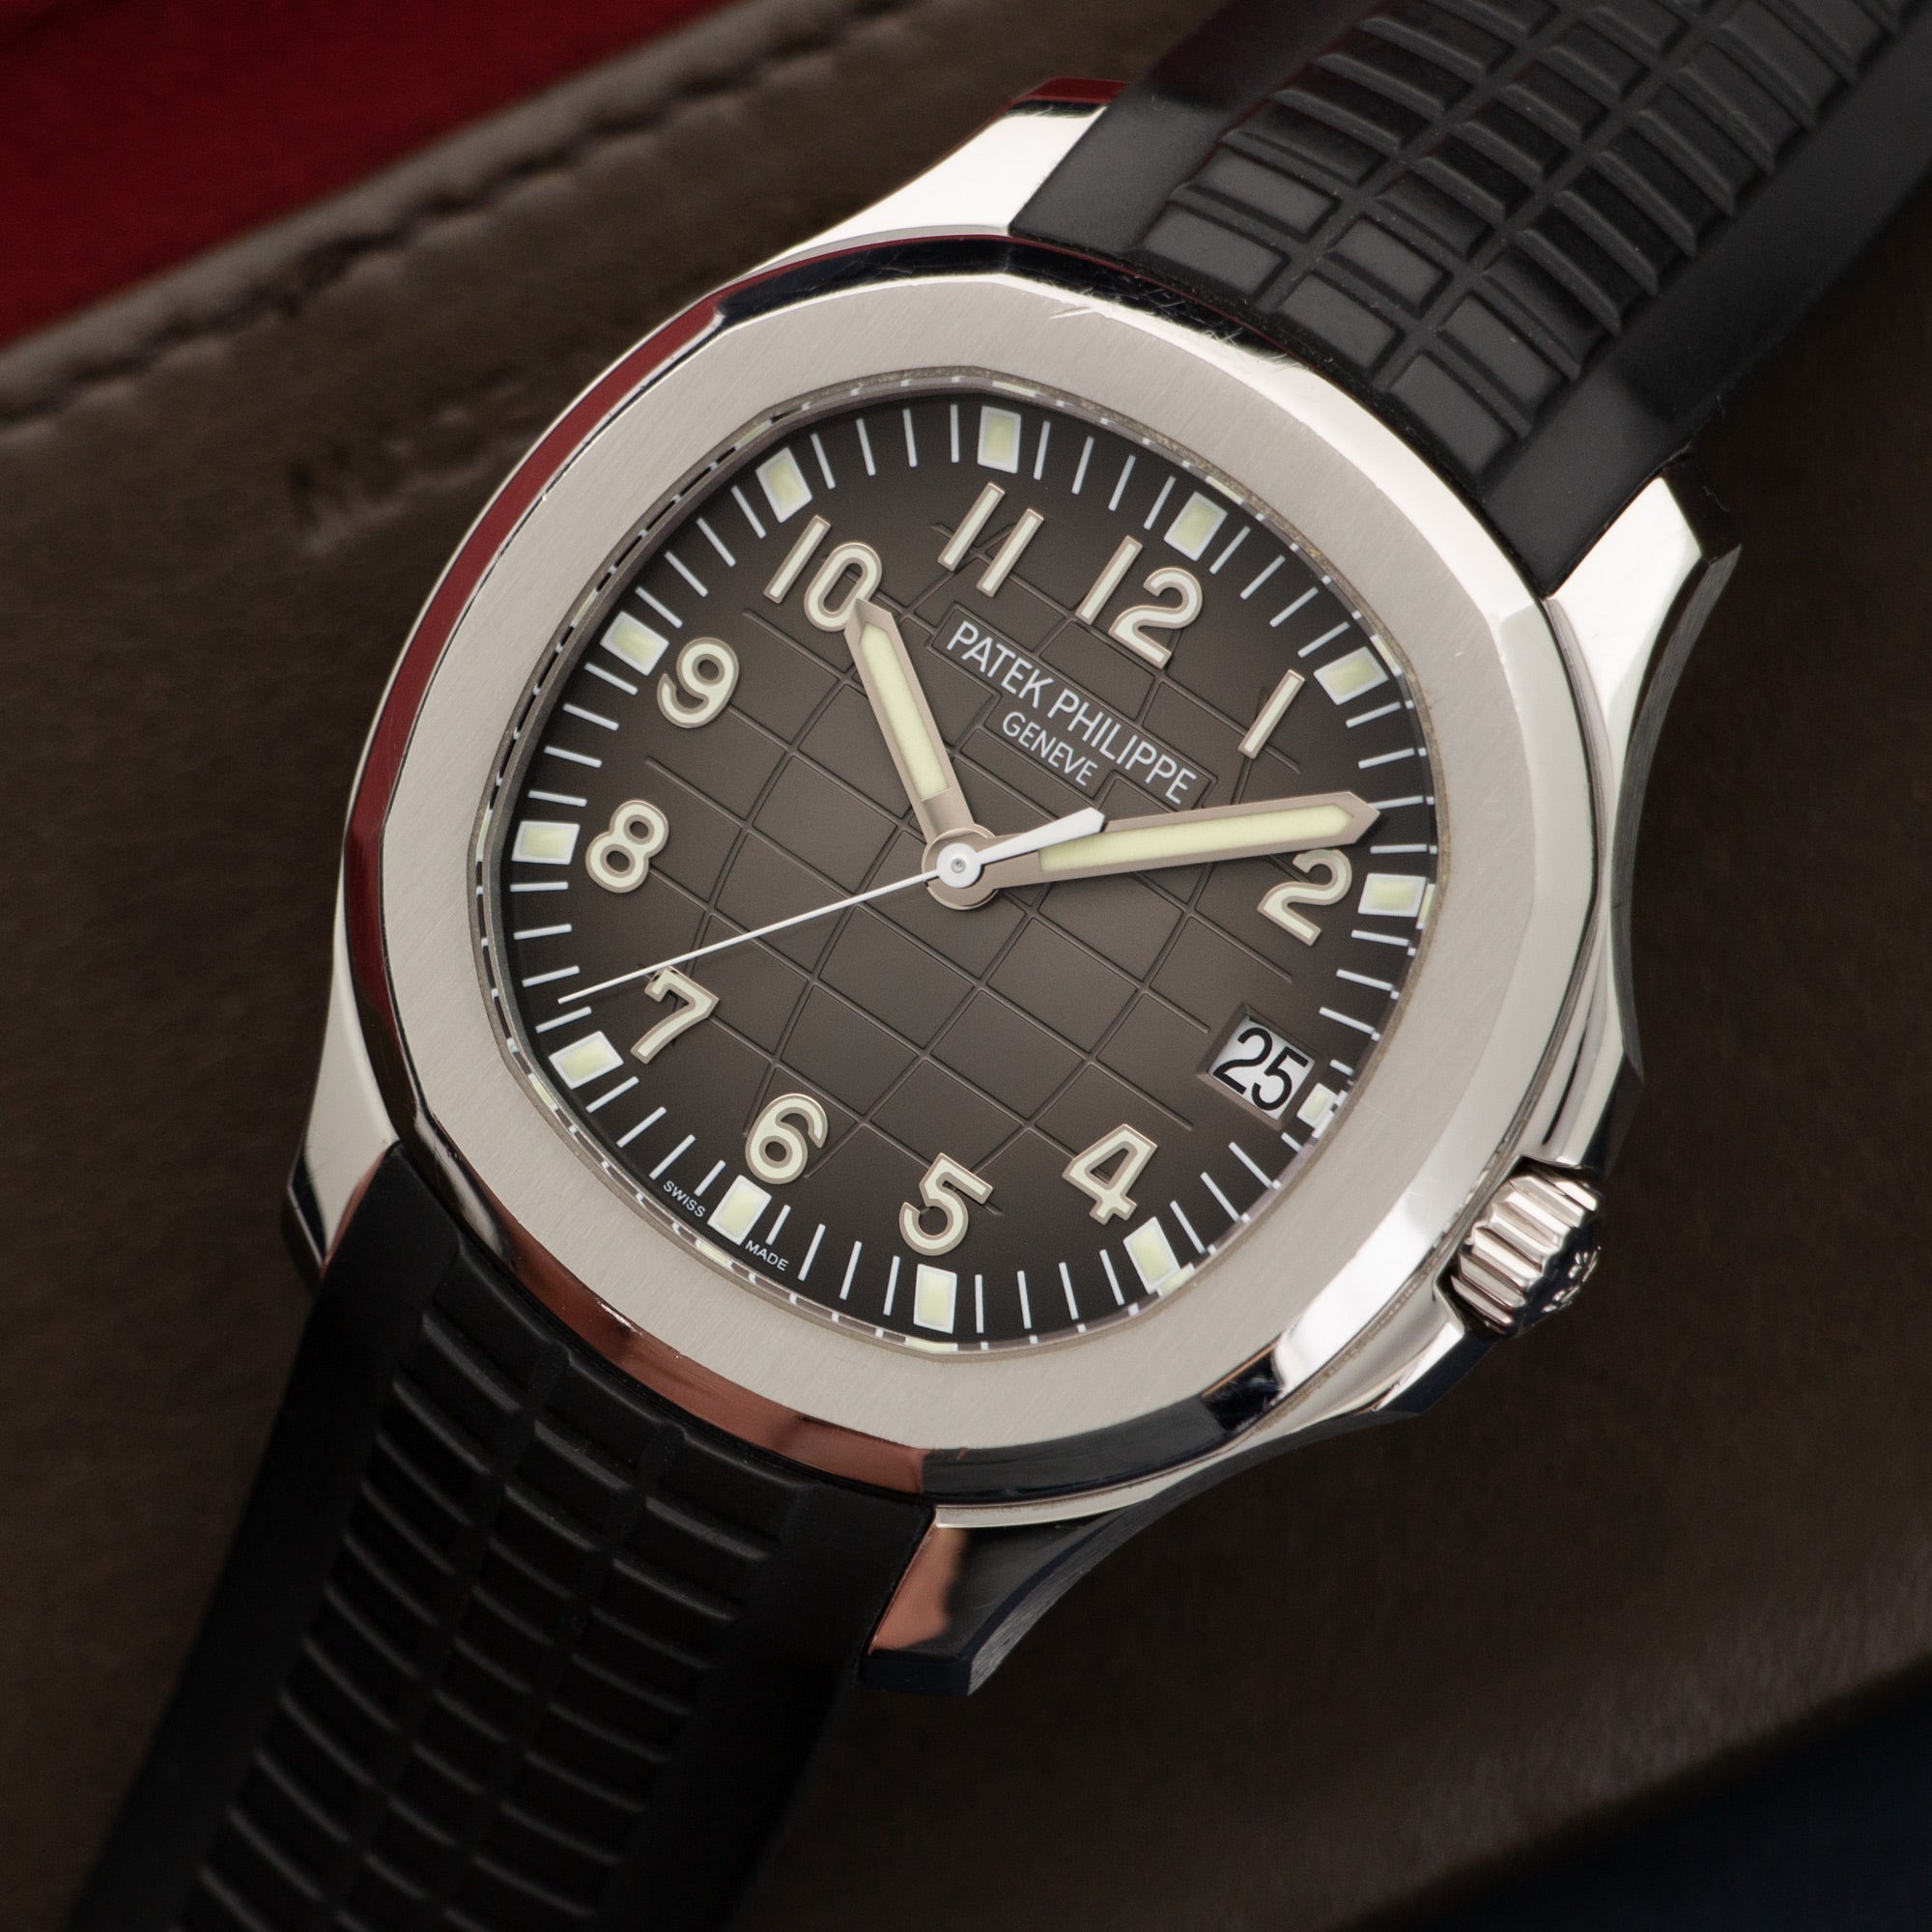 Patek Philippe - Patek Philippe Aquanaut Jumbo Automatic Watch Ref. 5167 - The Keystone Watches